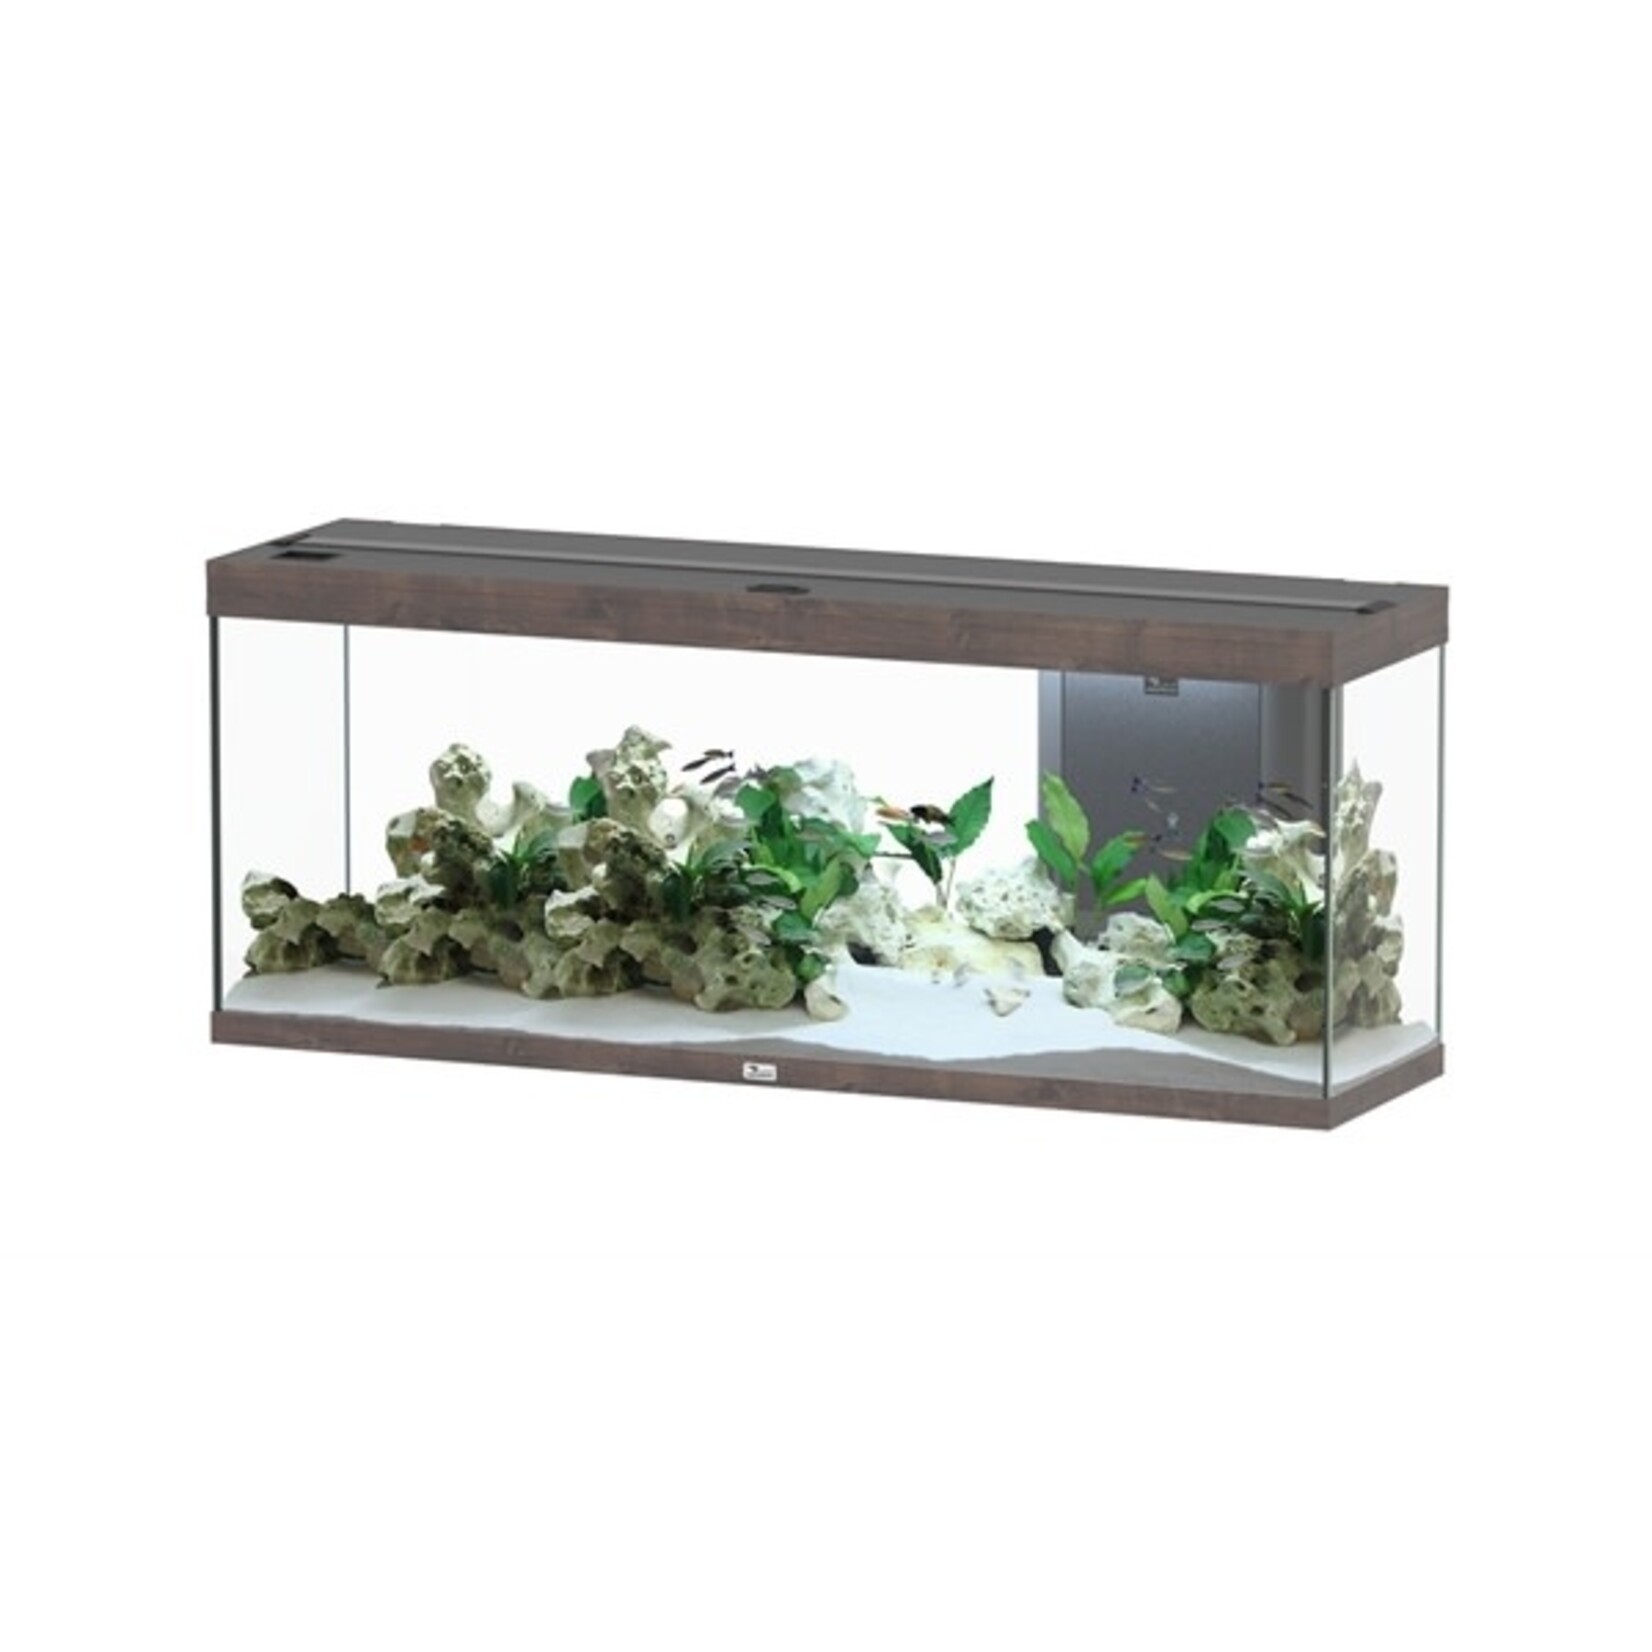 Aquatlantis Aquarium splendid 150 biobox dark wood-096